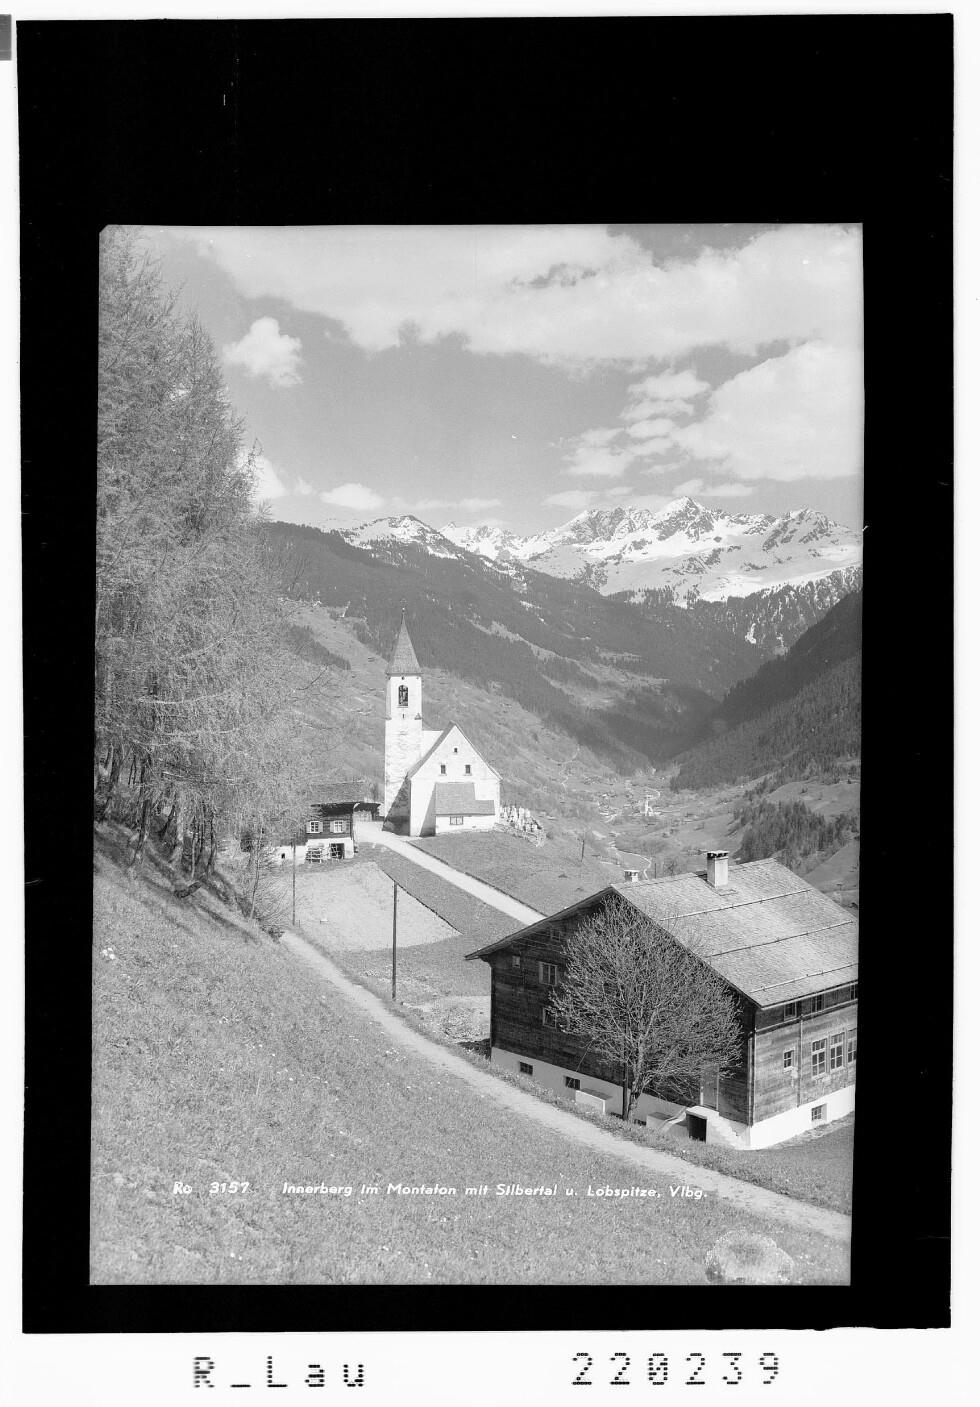 Innerberg im Montafon mit Silbertal und Lobspitze